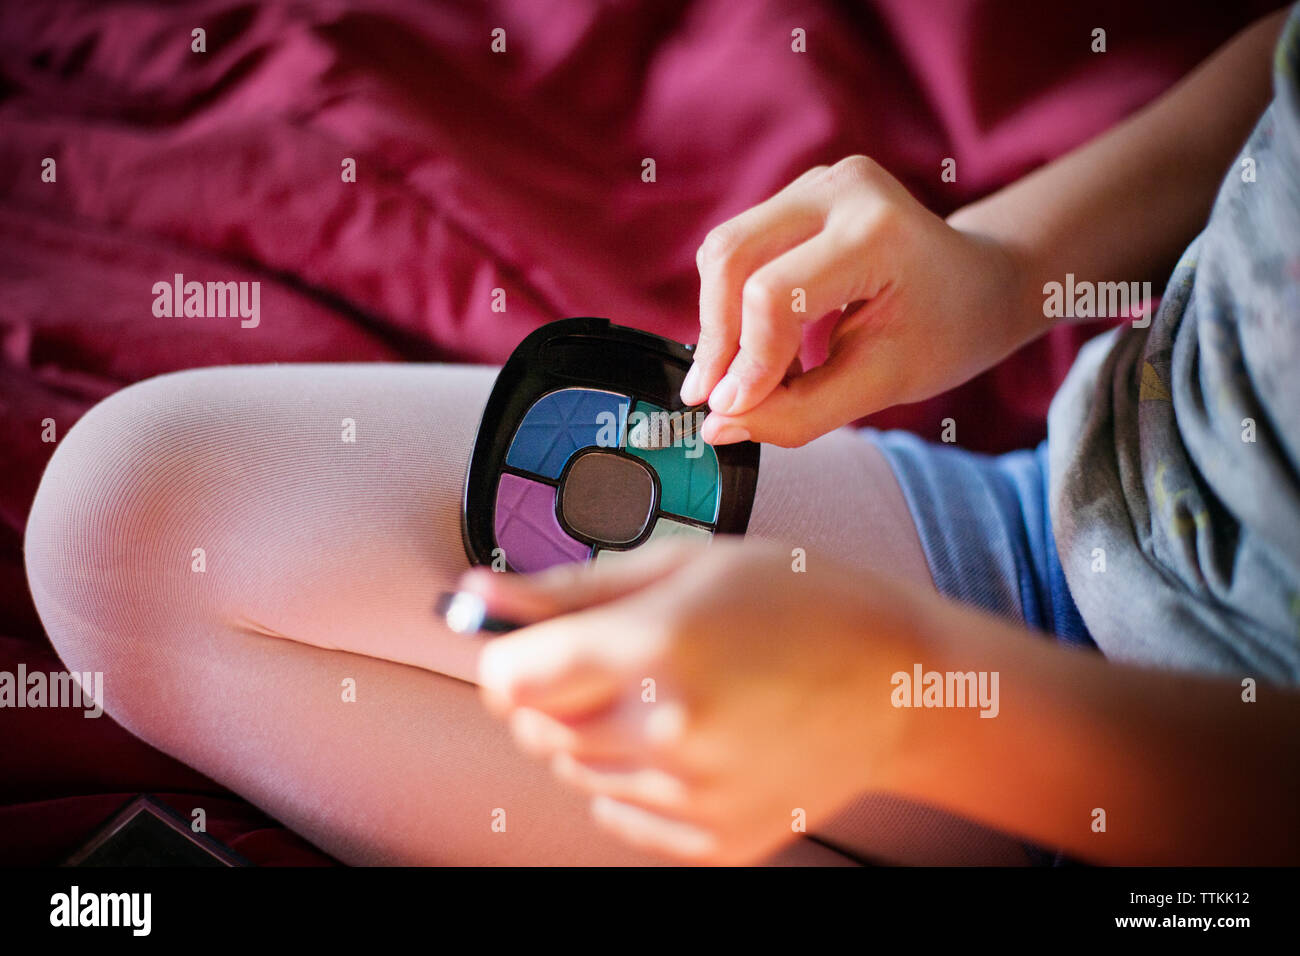 Portrait of Girl holding makeup on bed Banque D'Images